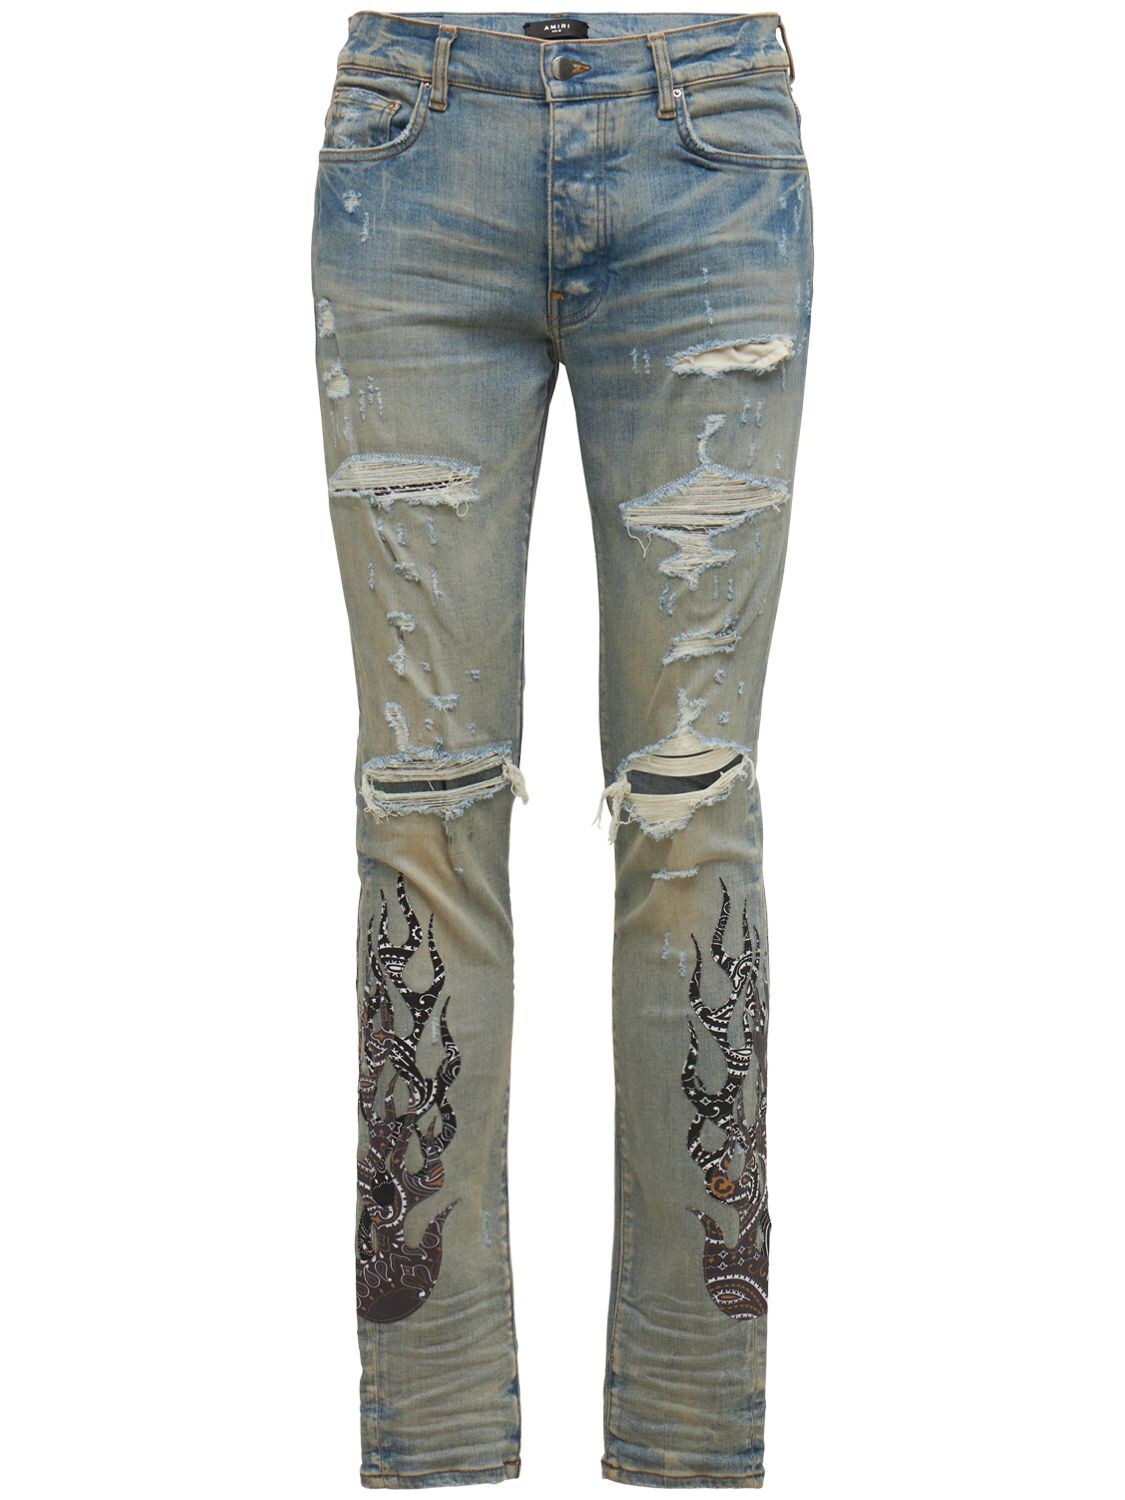 Bandana Flame Distressed Denim Jeans